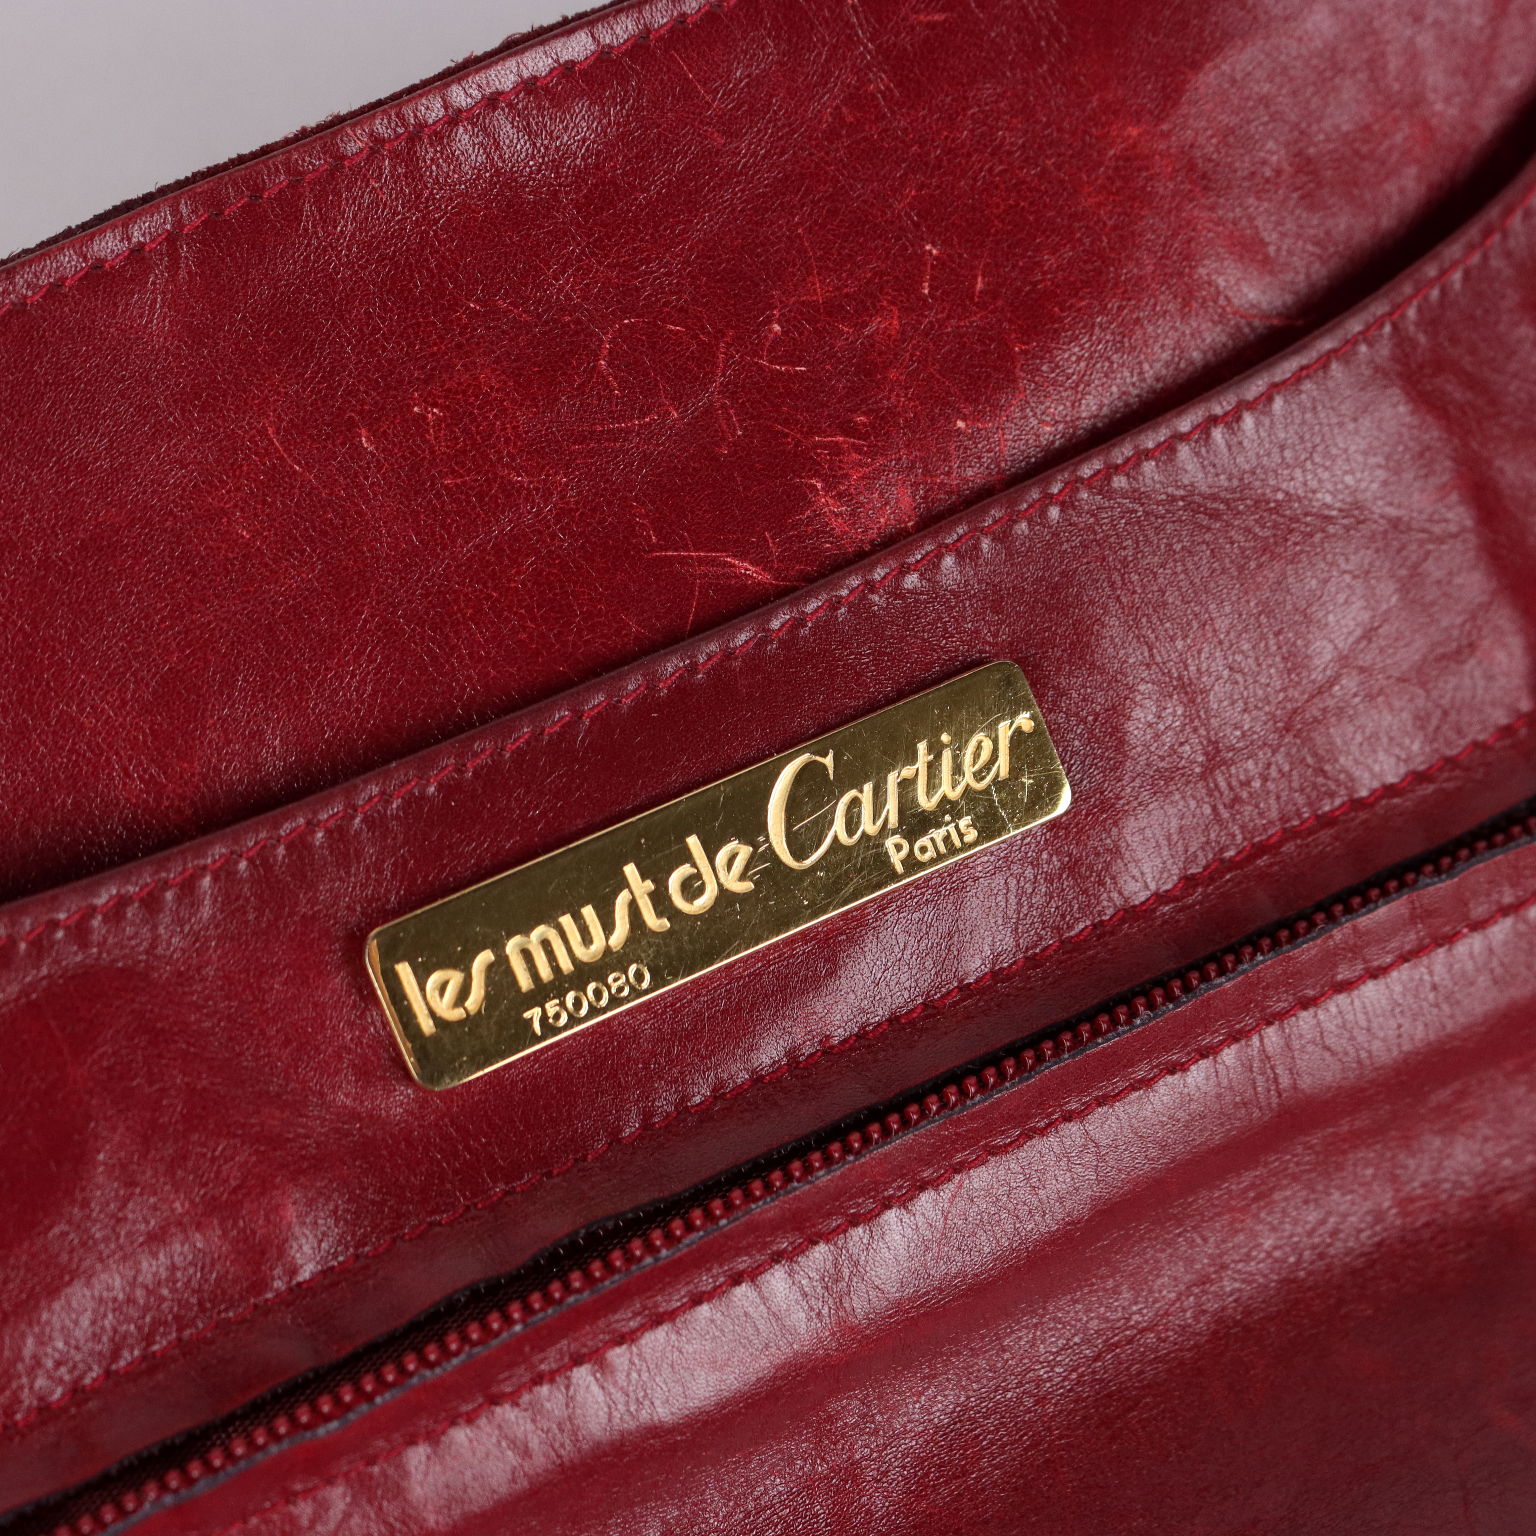 Cartier Portagioielli Vintage in Pelle Scamosciata color Bordeaux